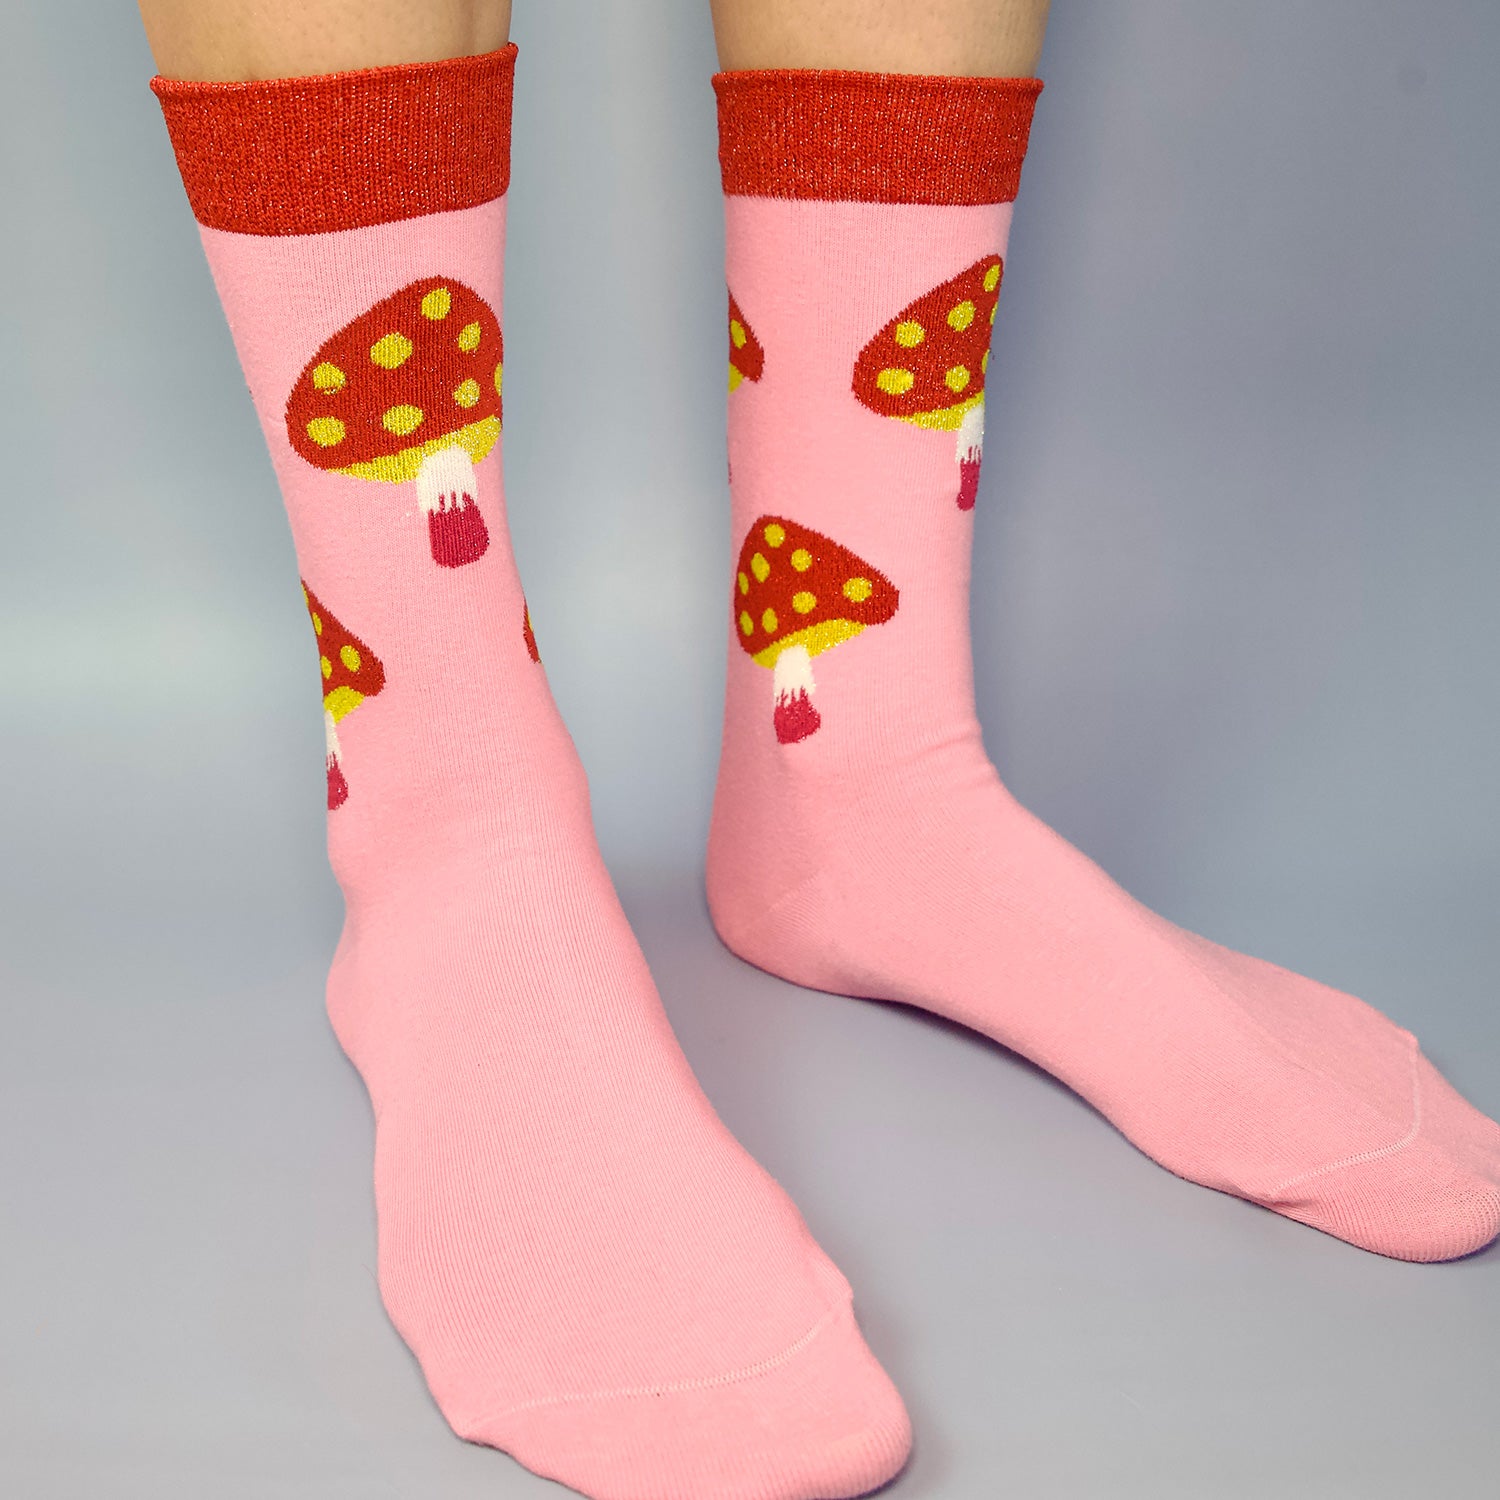 pink mushrooms socks with metallic detalis in red